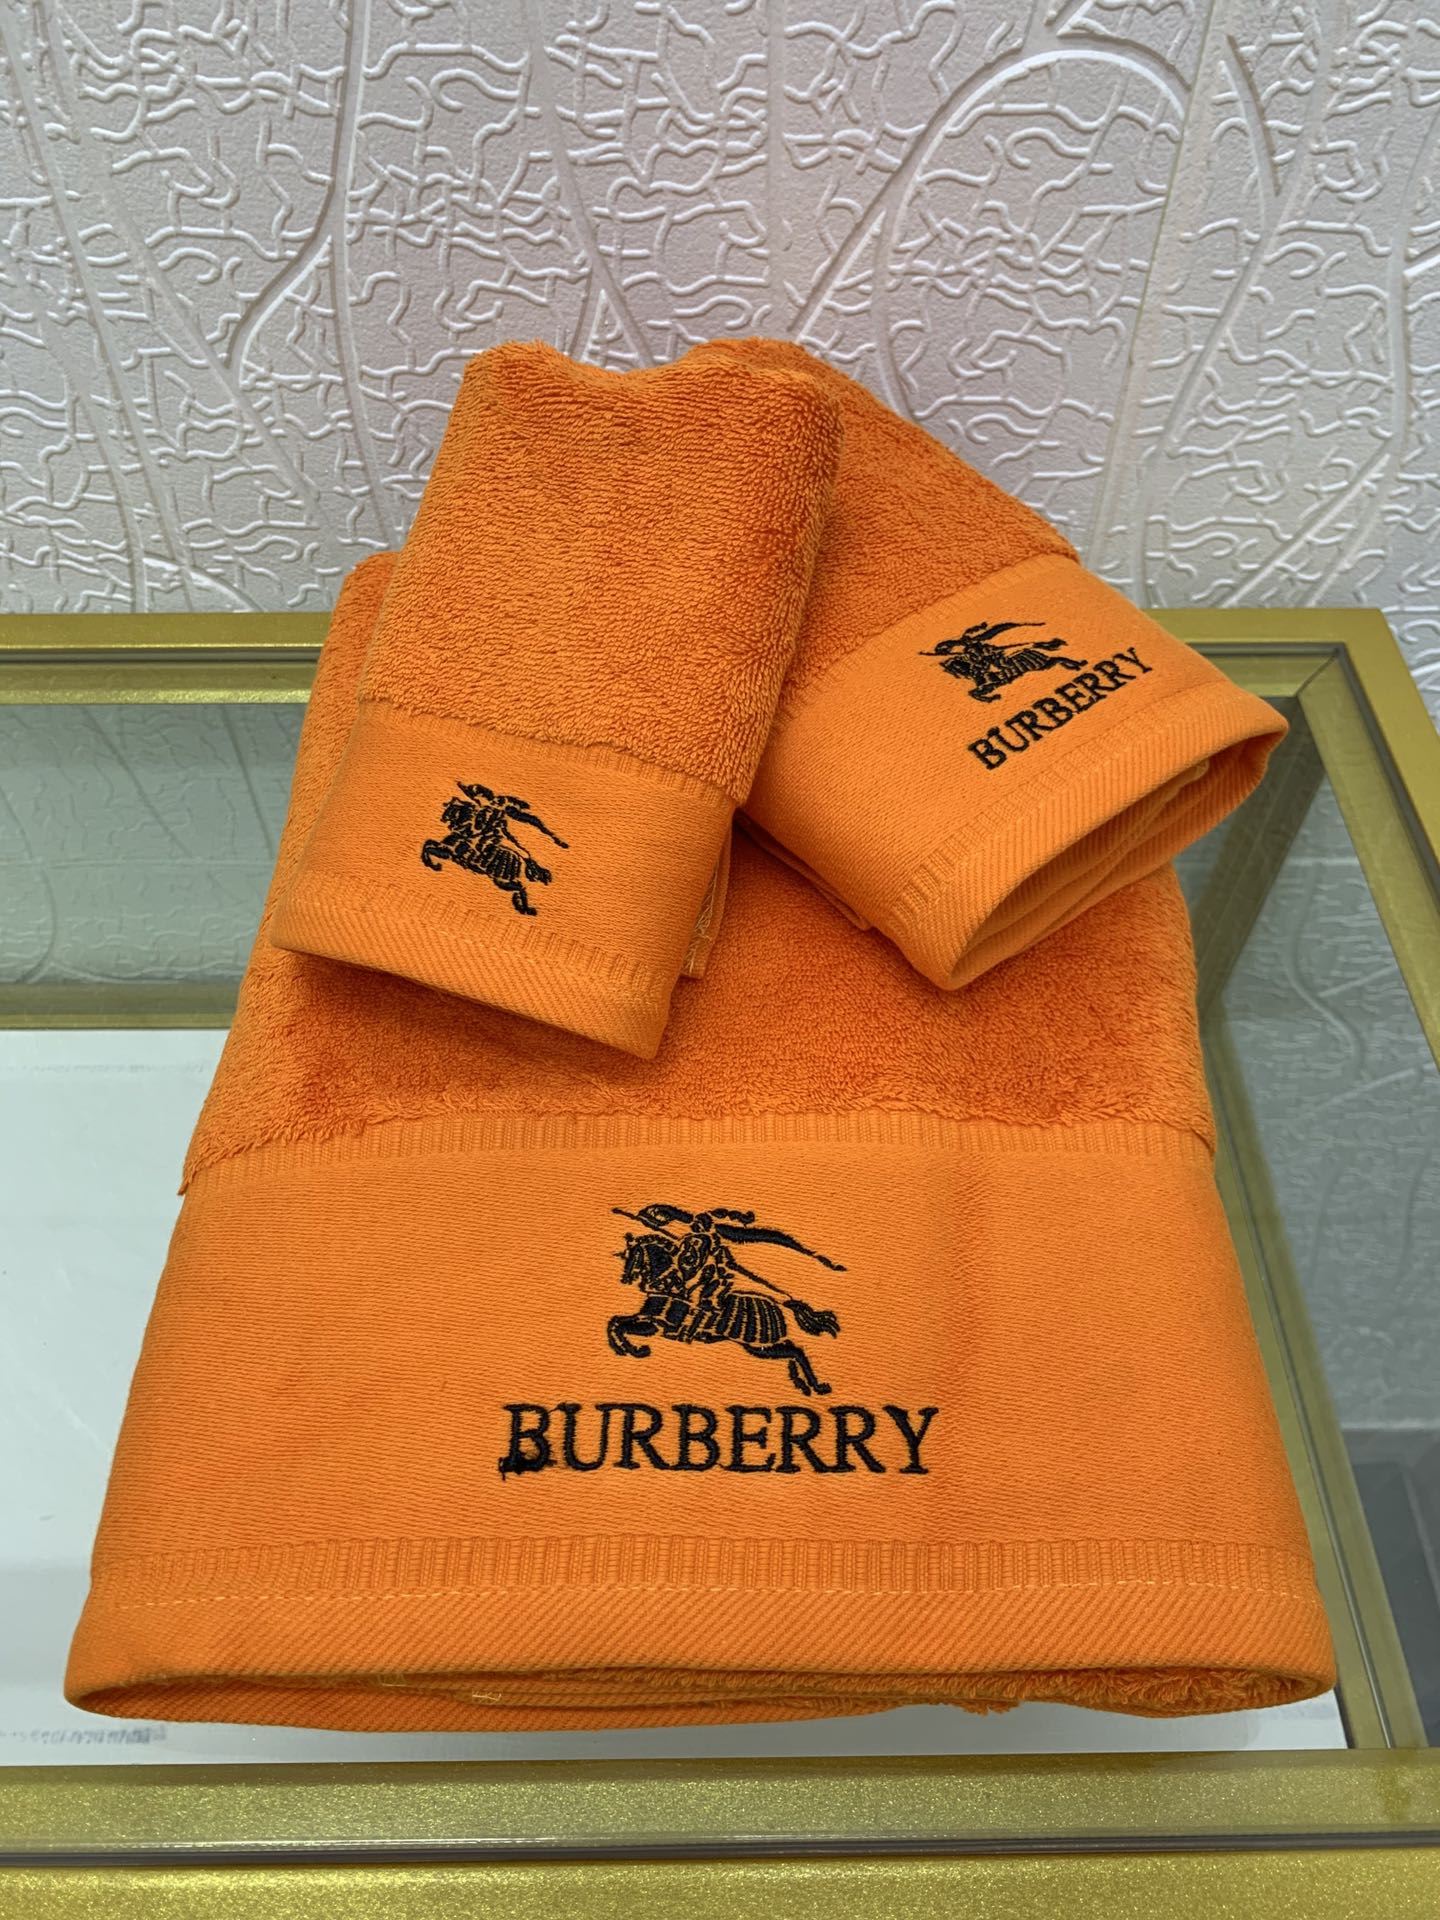 Burberry Bath Towel